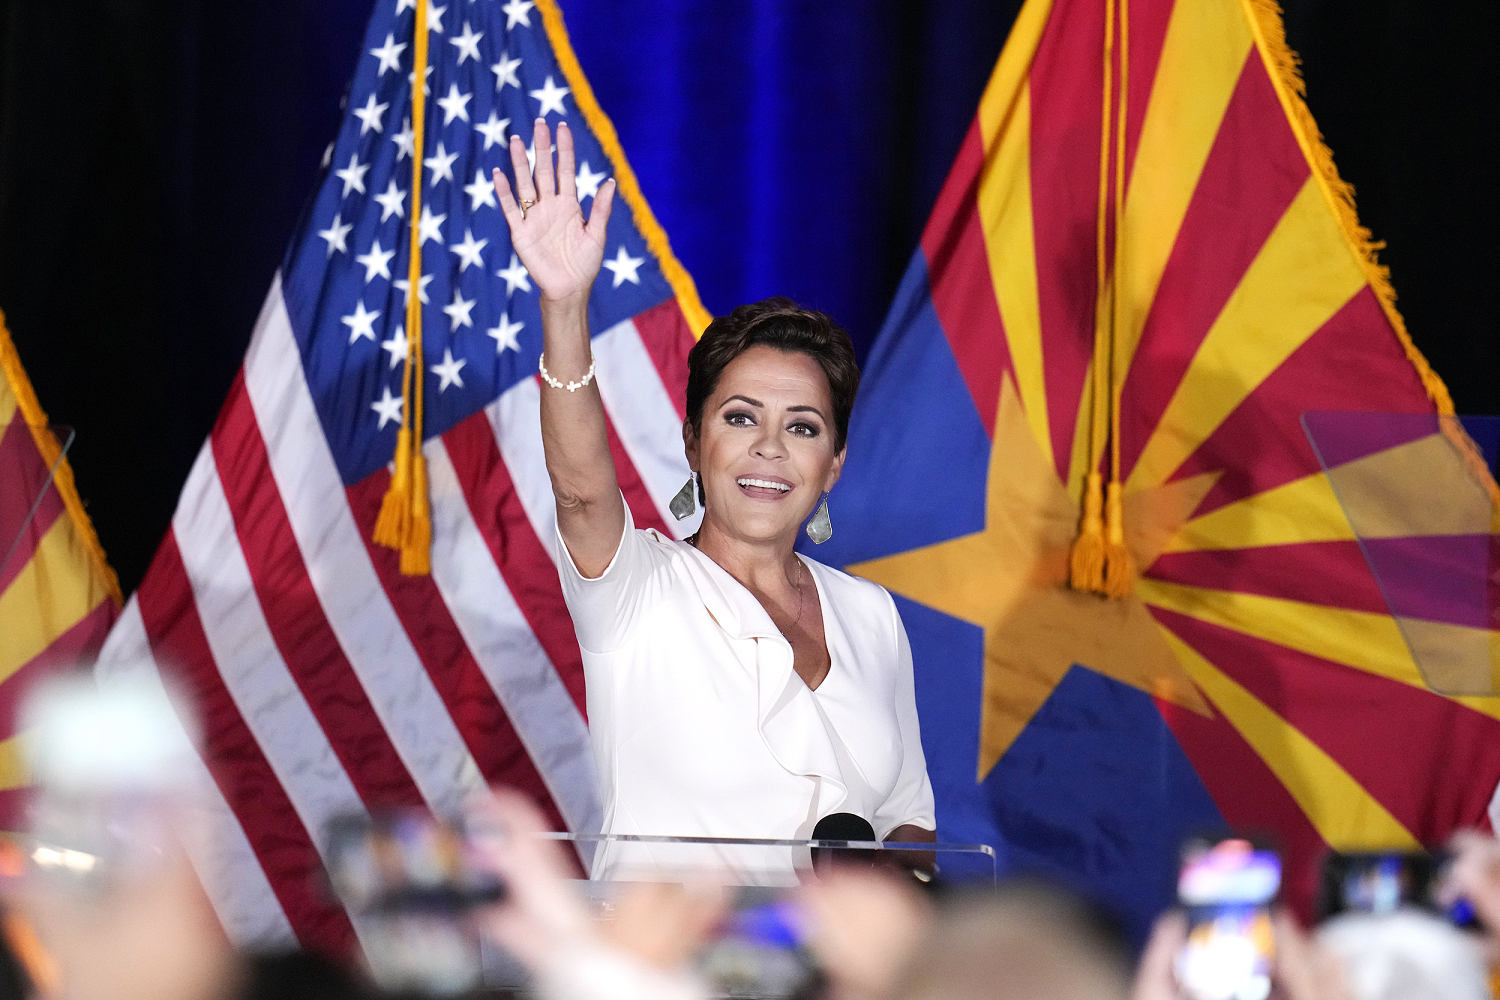 Kari Lake wins Arizona GOP Senate primary, setting up a key race against Democrat Ruben Gallego